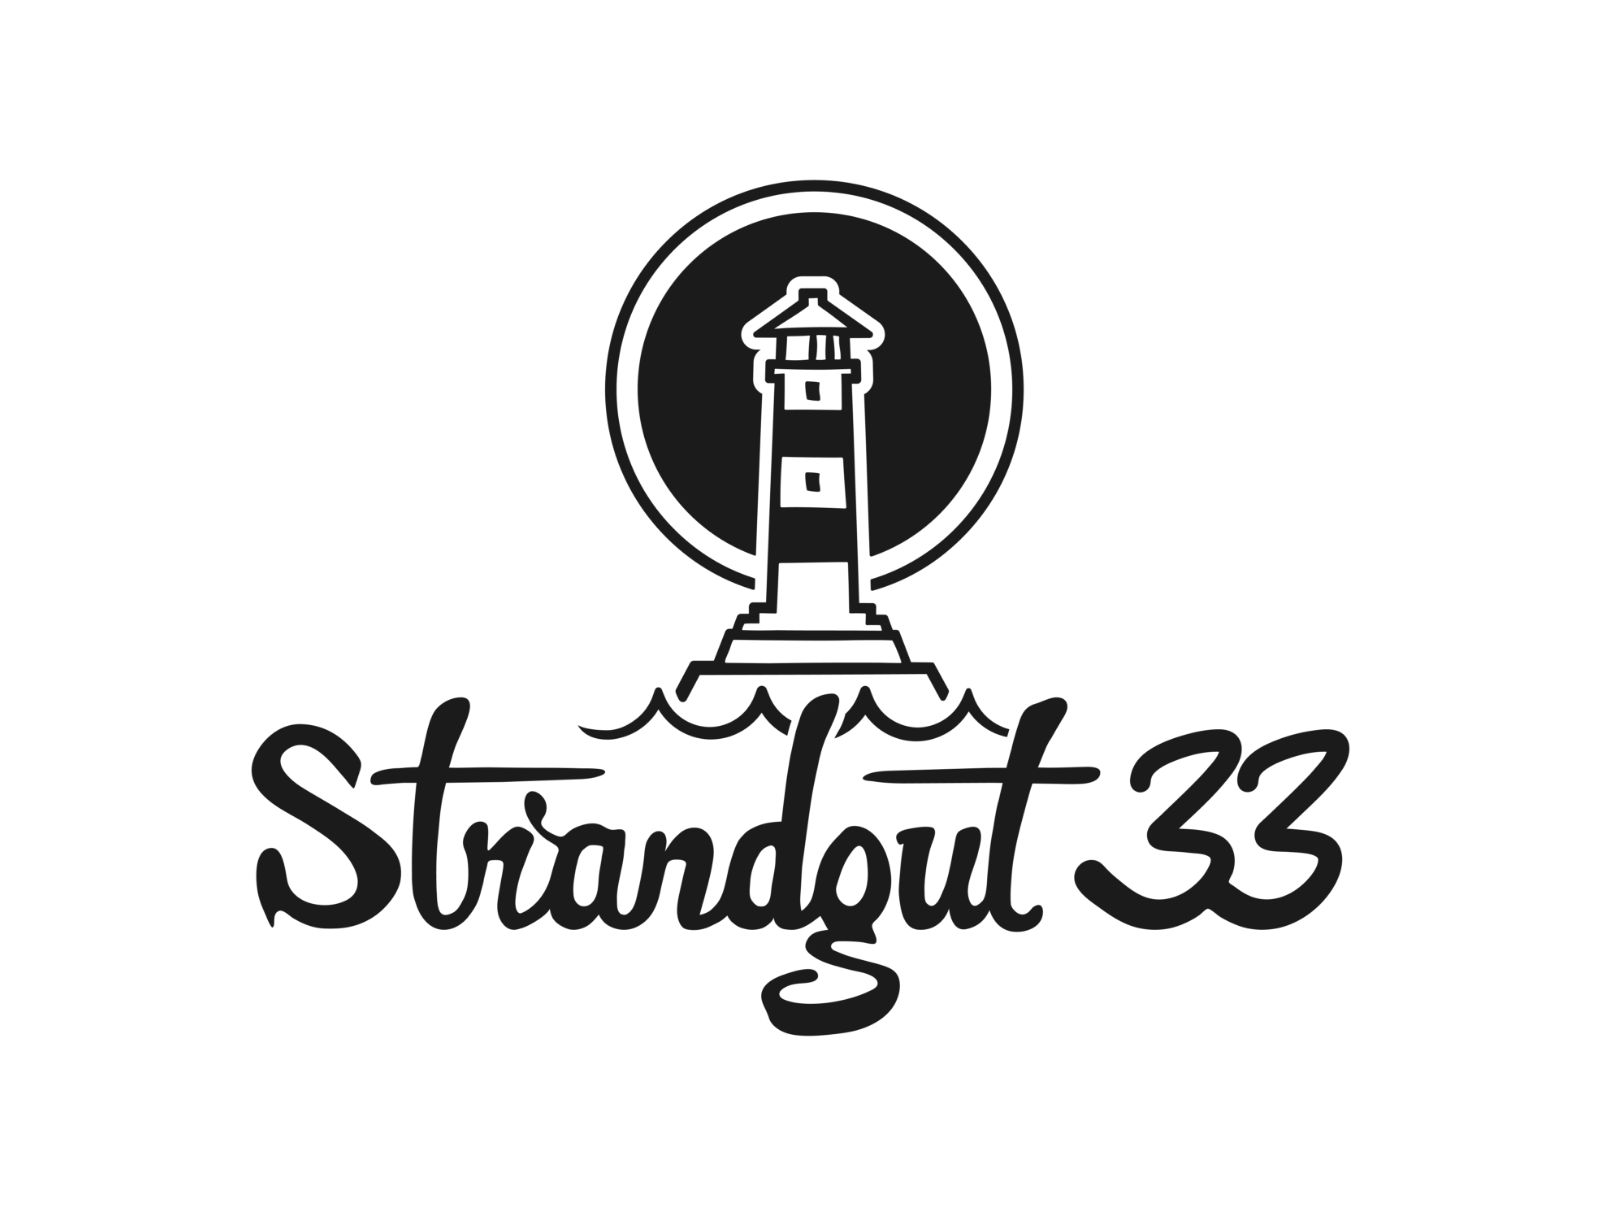 Strandgut 33 Logo